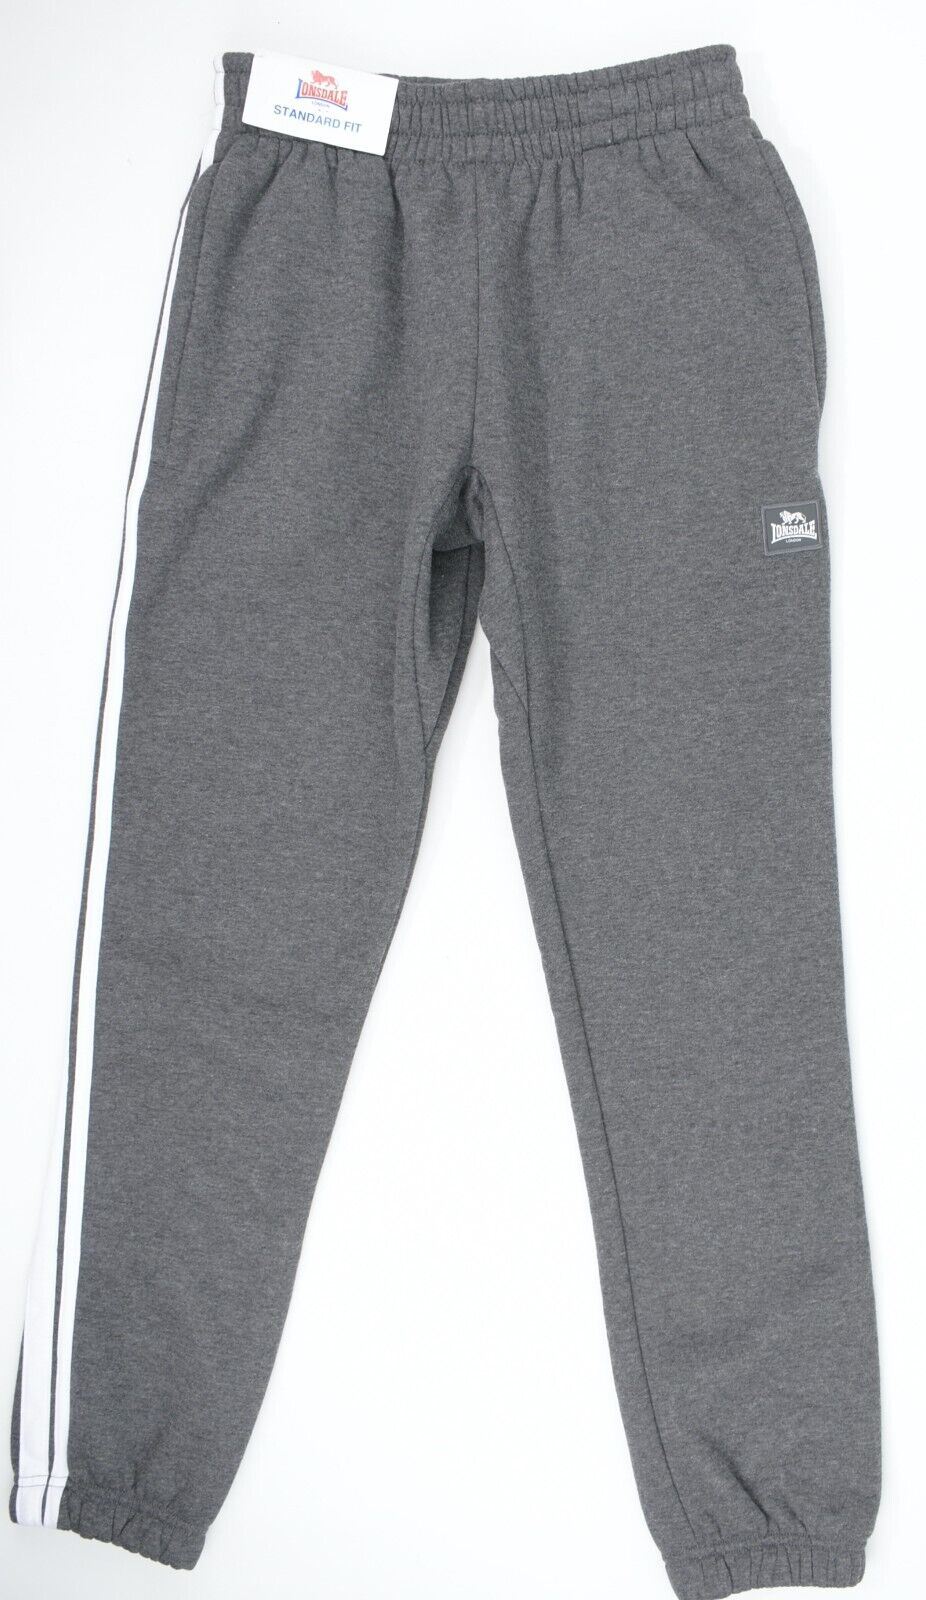 LONSDALE Men's Standard Fit Joggers, Cuffed Leg, Charcoal Grey/White, size XS